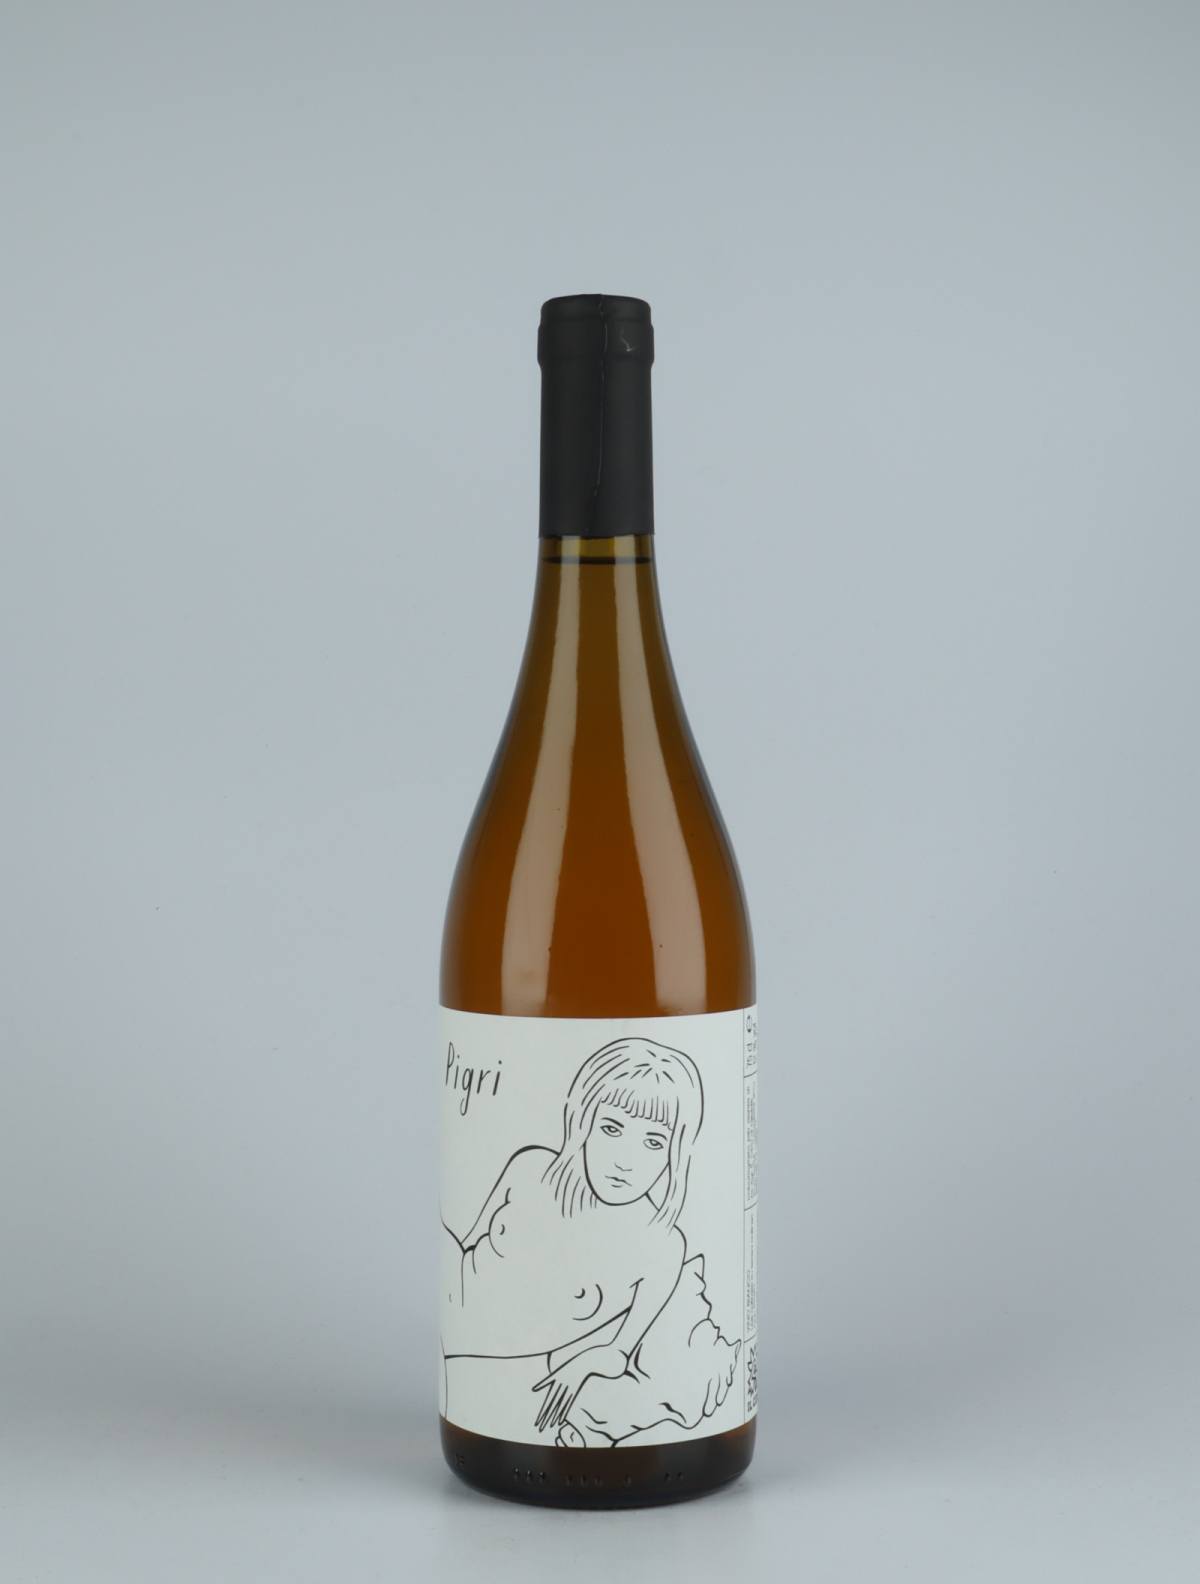 A bottle 2020 Pigri White wine from Il Ceo, Veneto in Italy